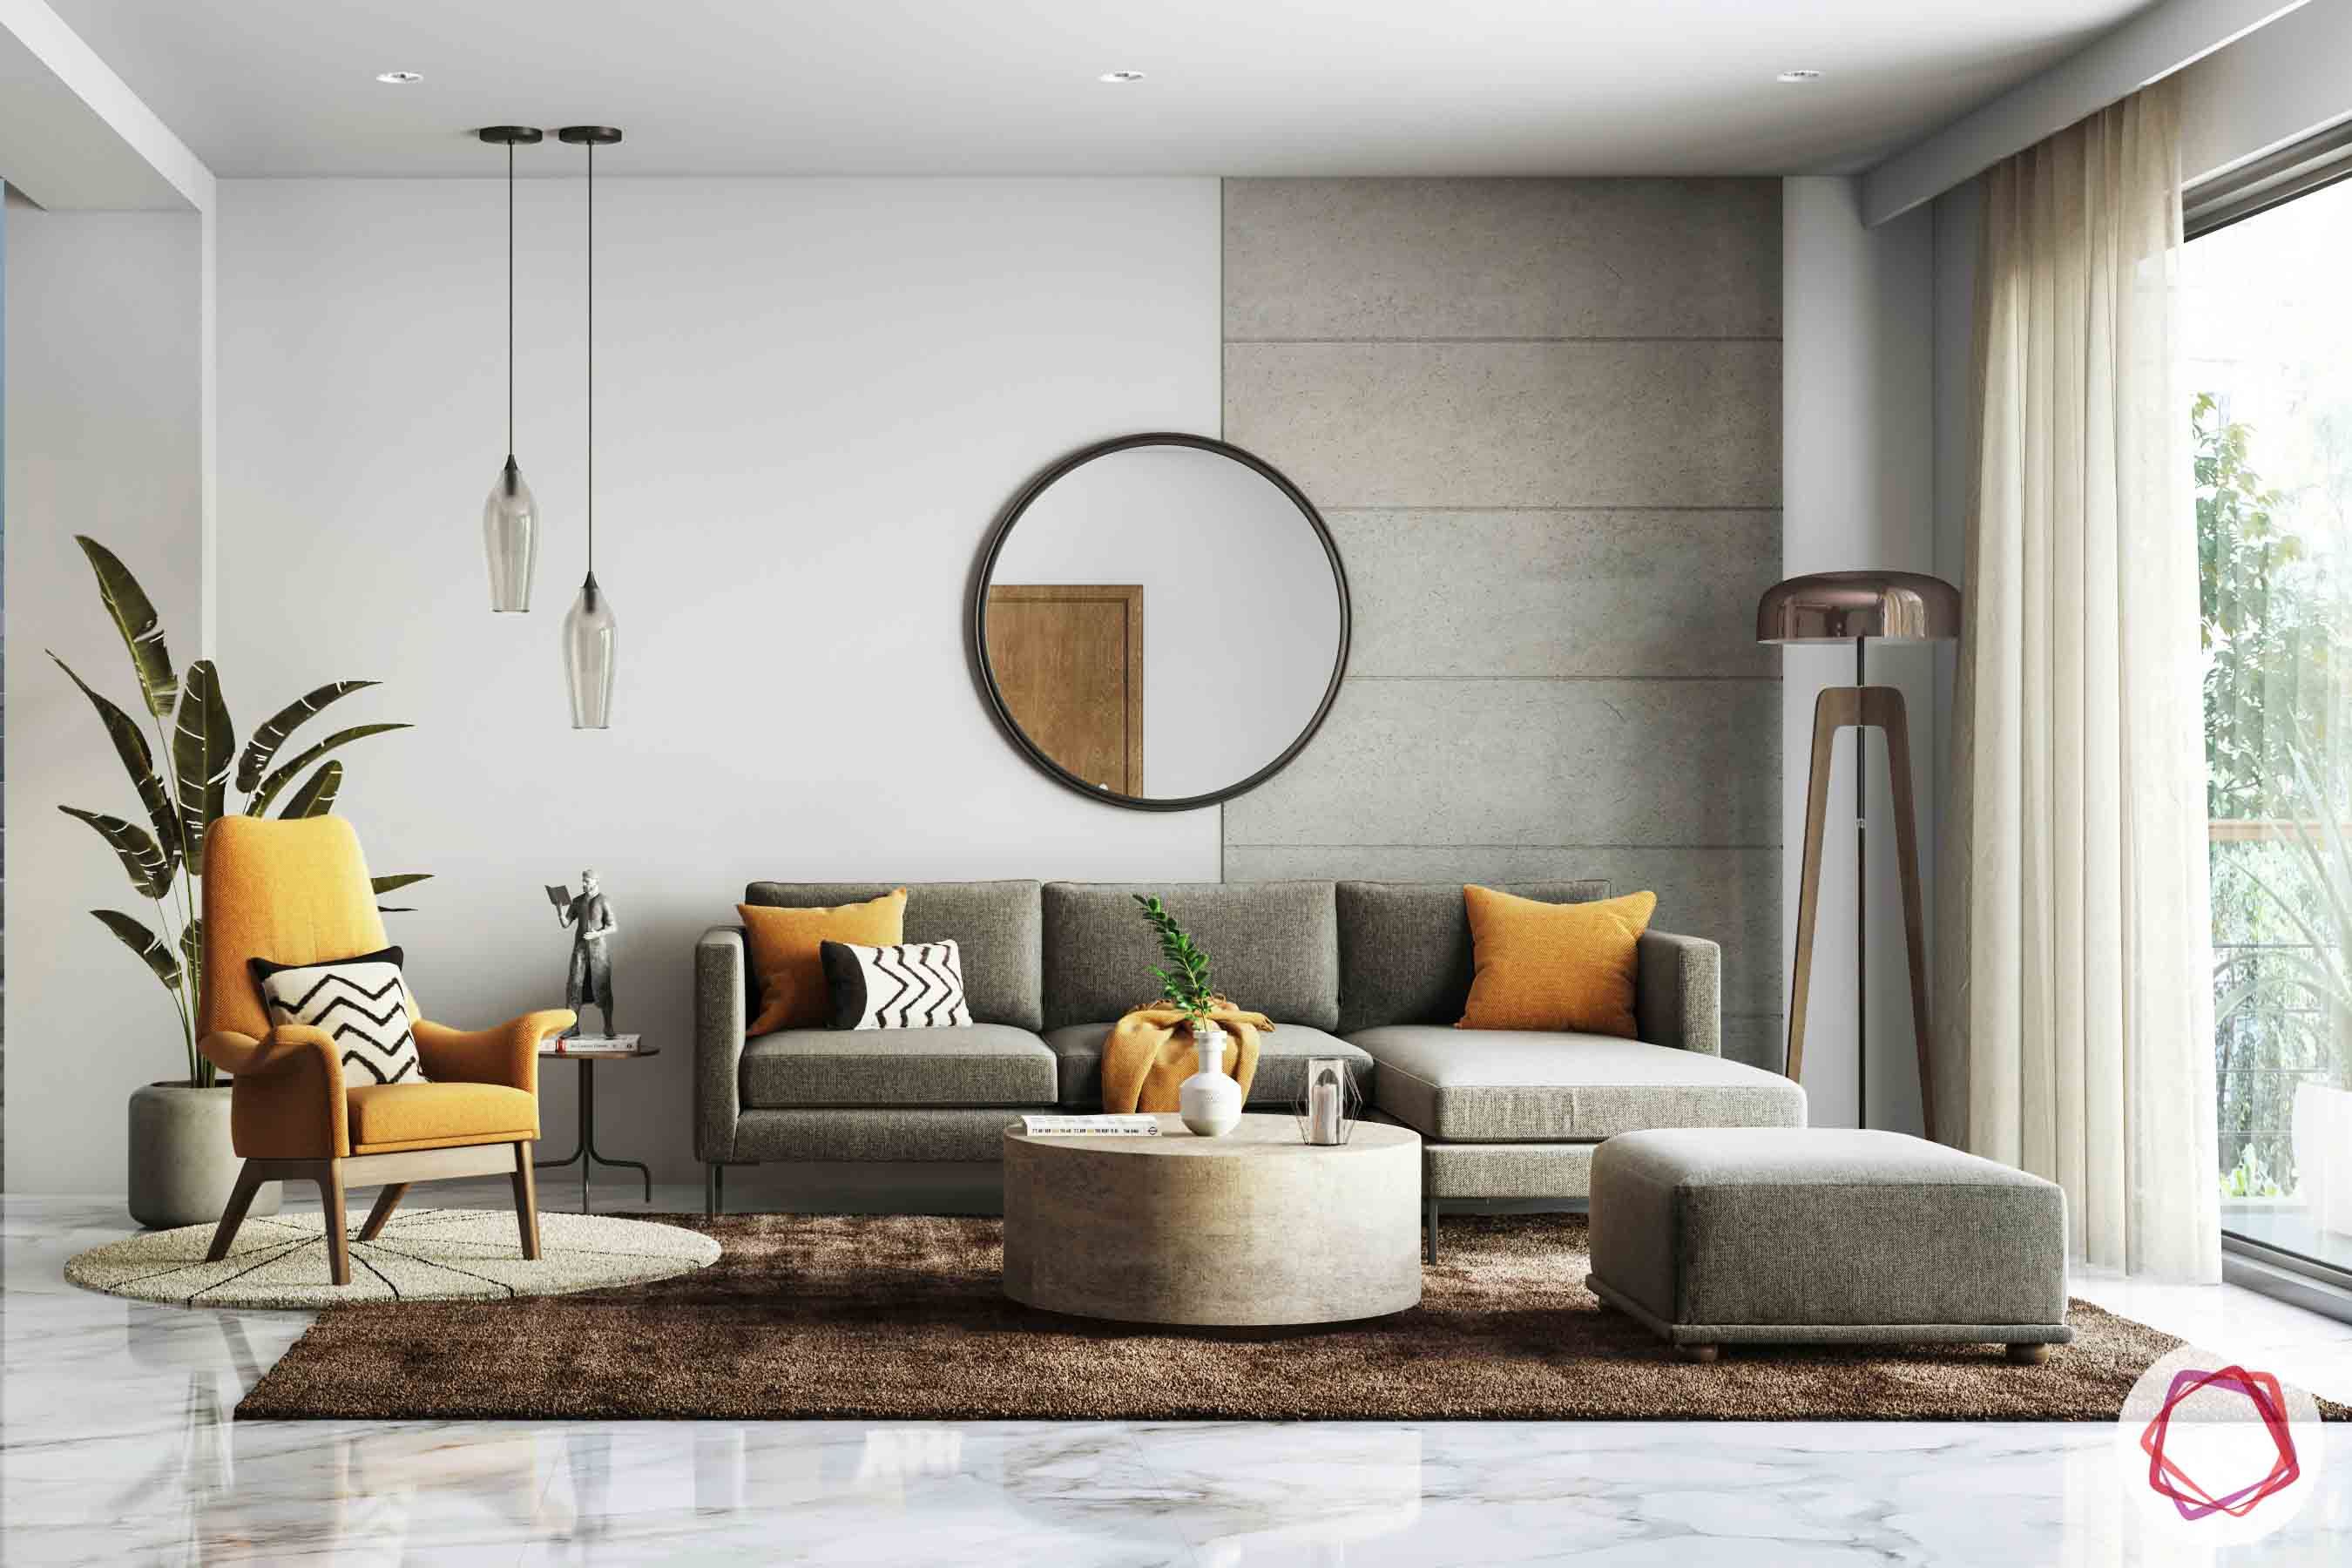 john abraham-grey sofa designs-orange armchair designs-round centre table designs